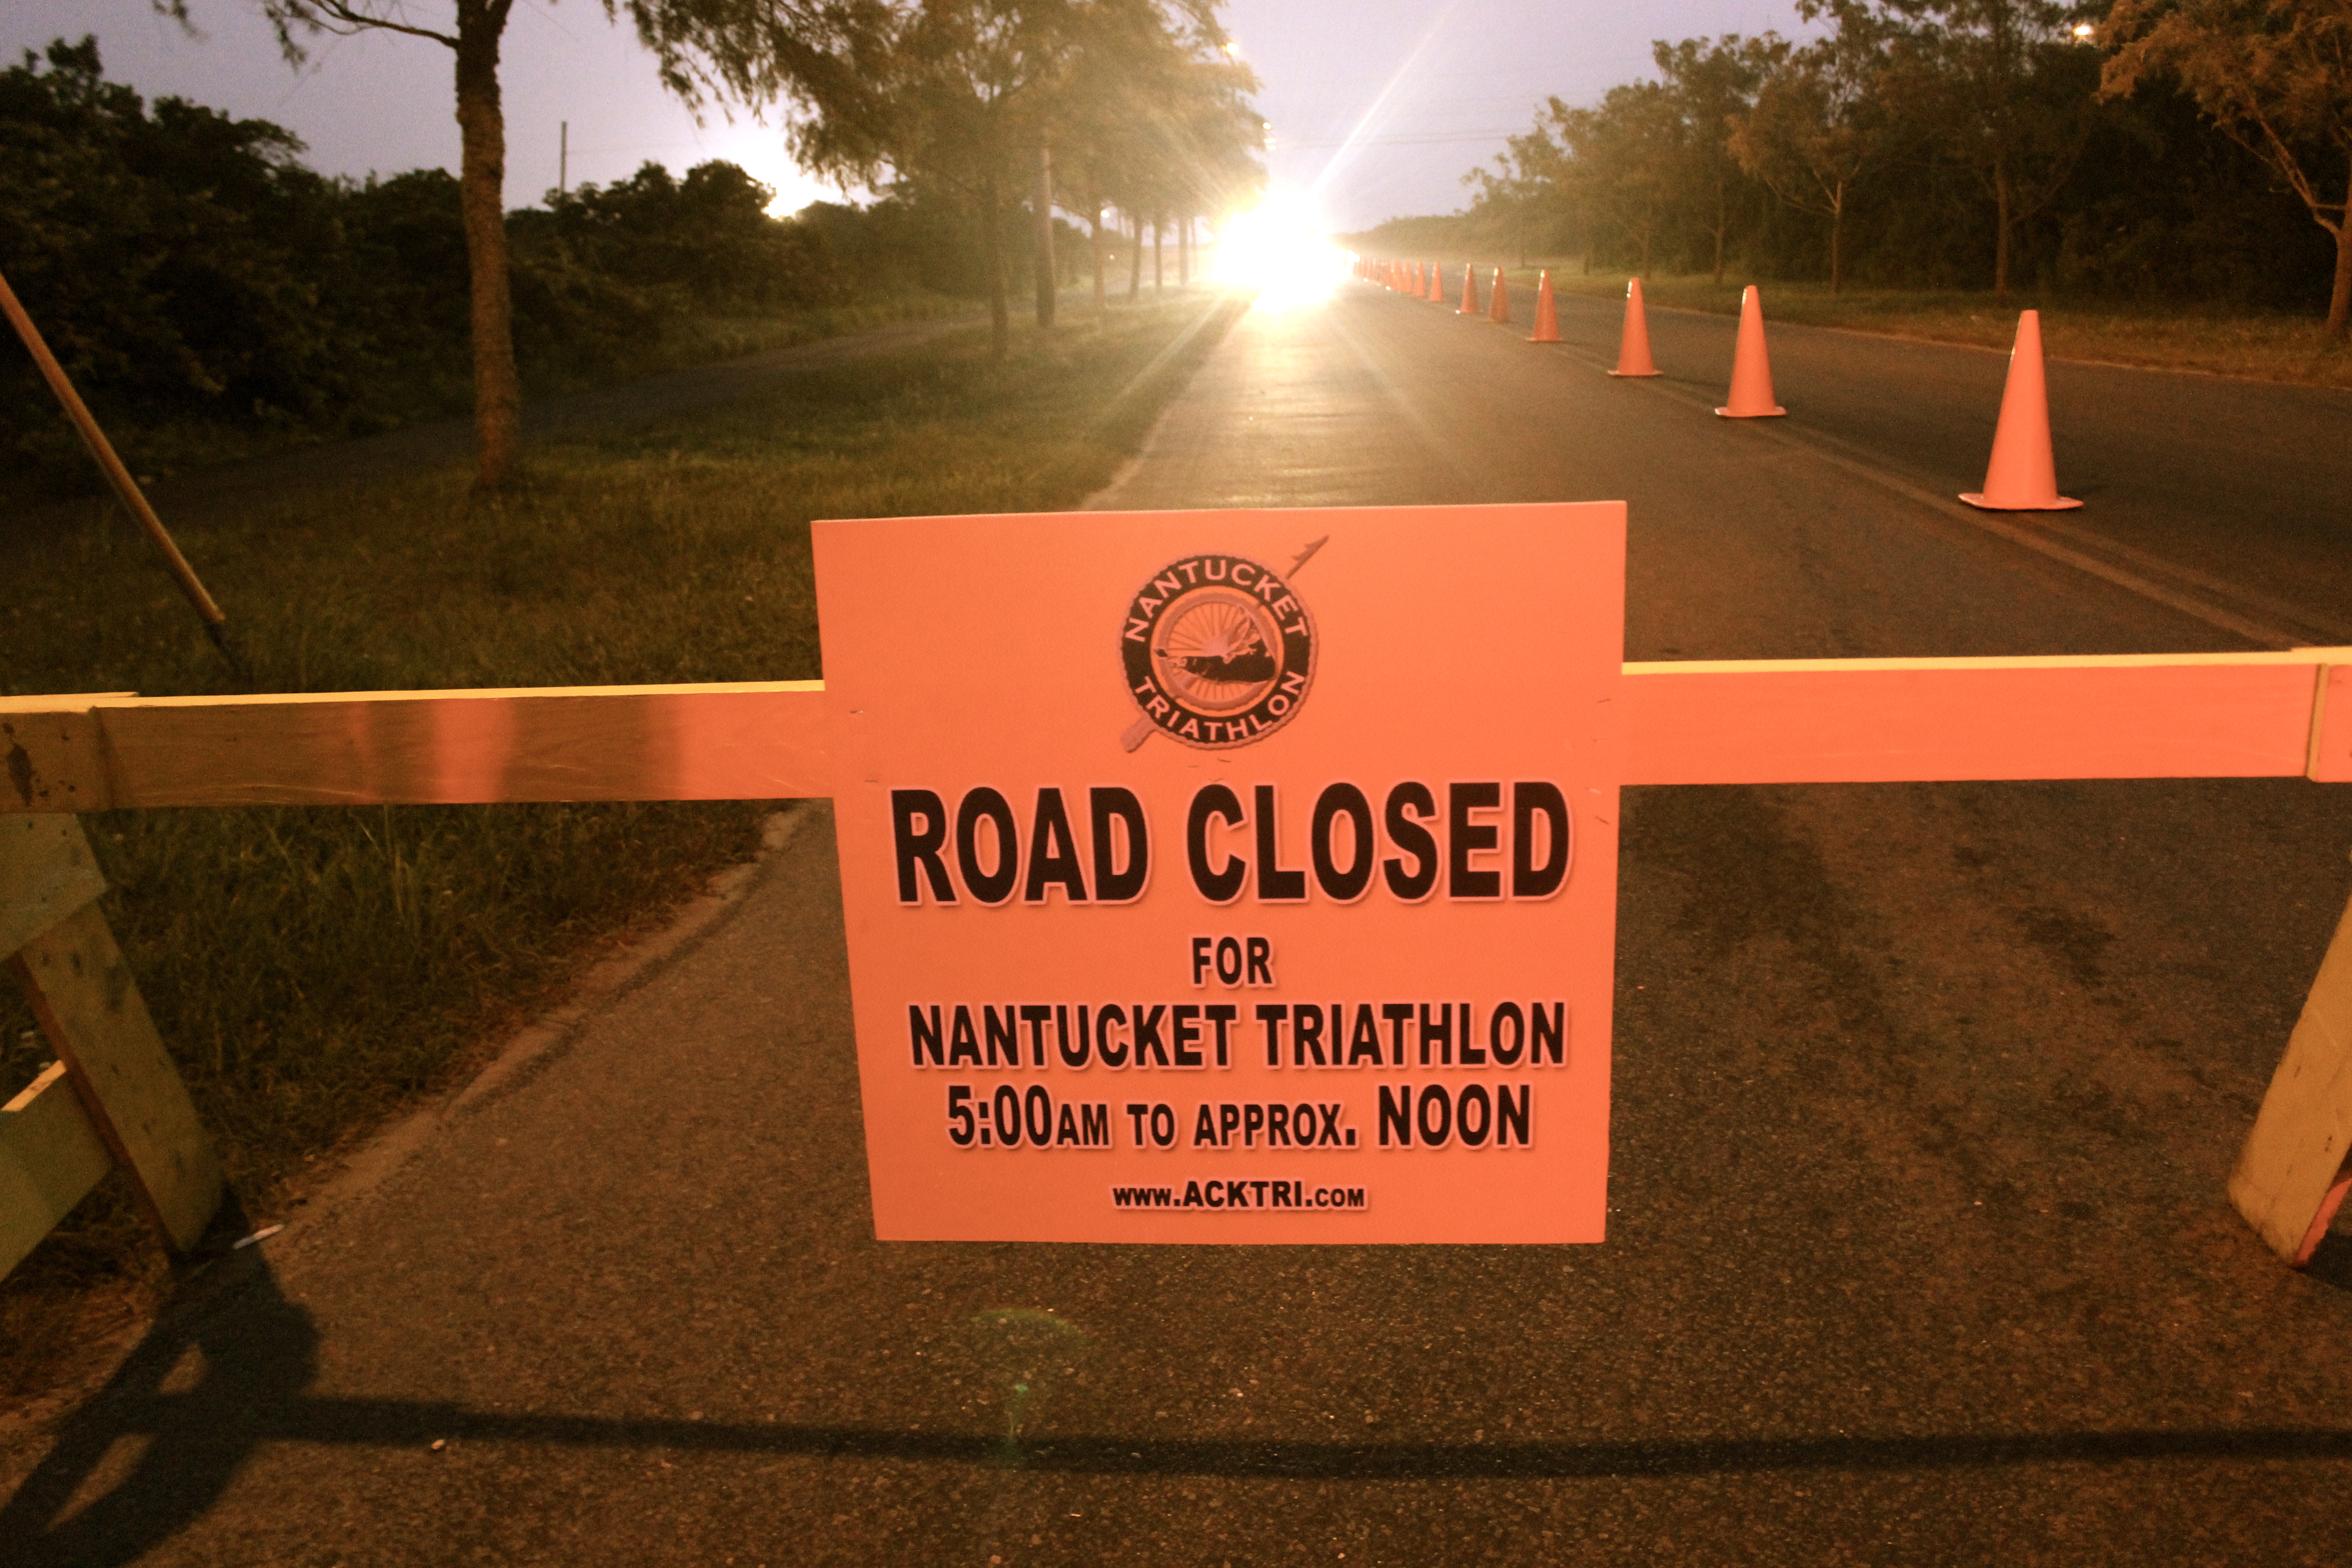 Nantucket Triathlon Road Closed